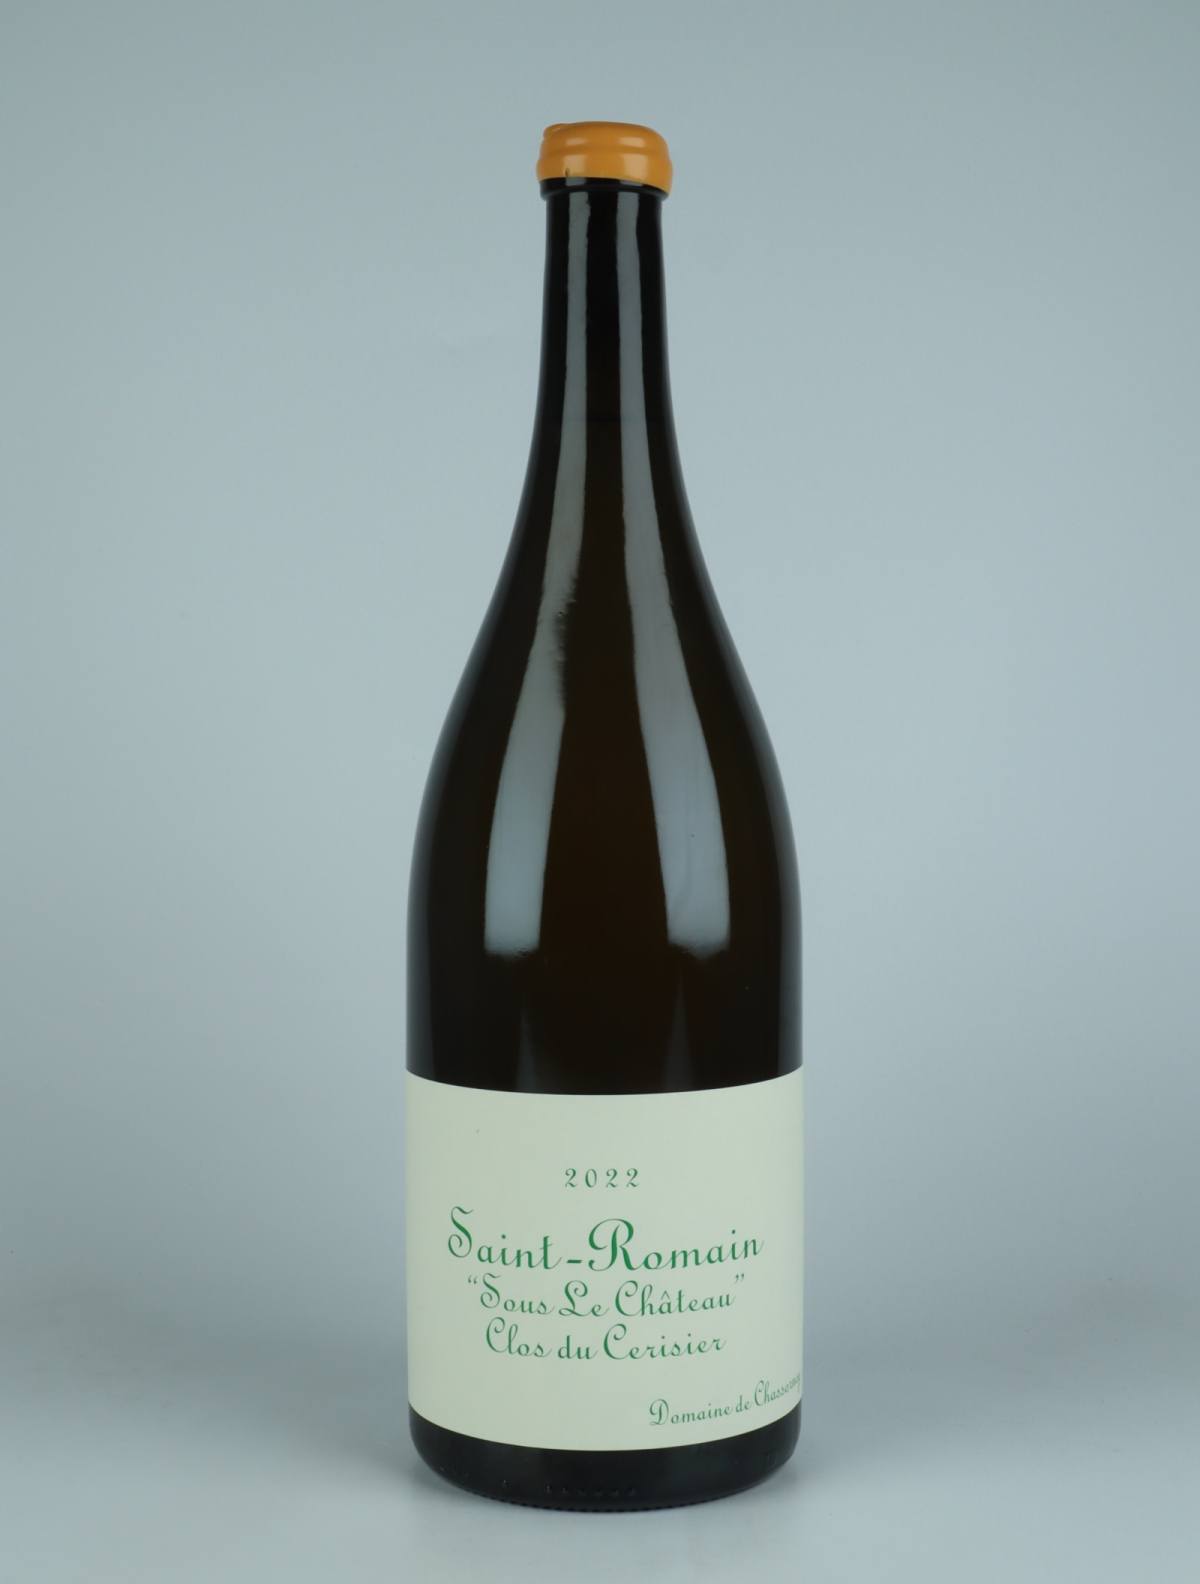 A bottle 2022 Saint Romain Blanc - Clos du Cerisier White wine from Domaine de Chassorney, Burgundy in France